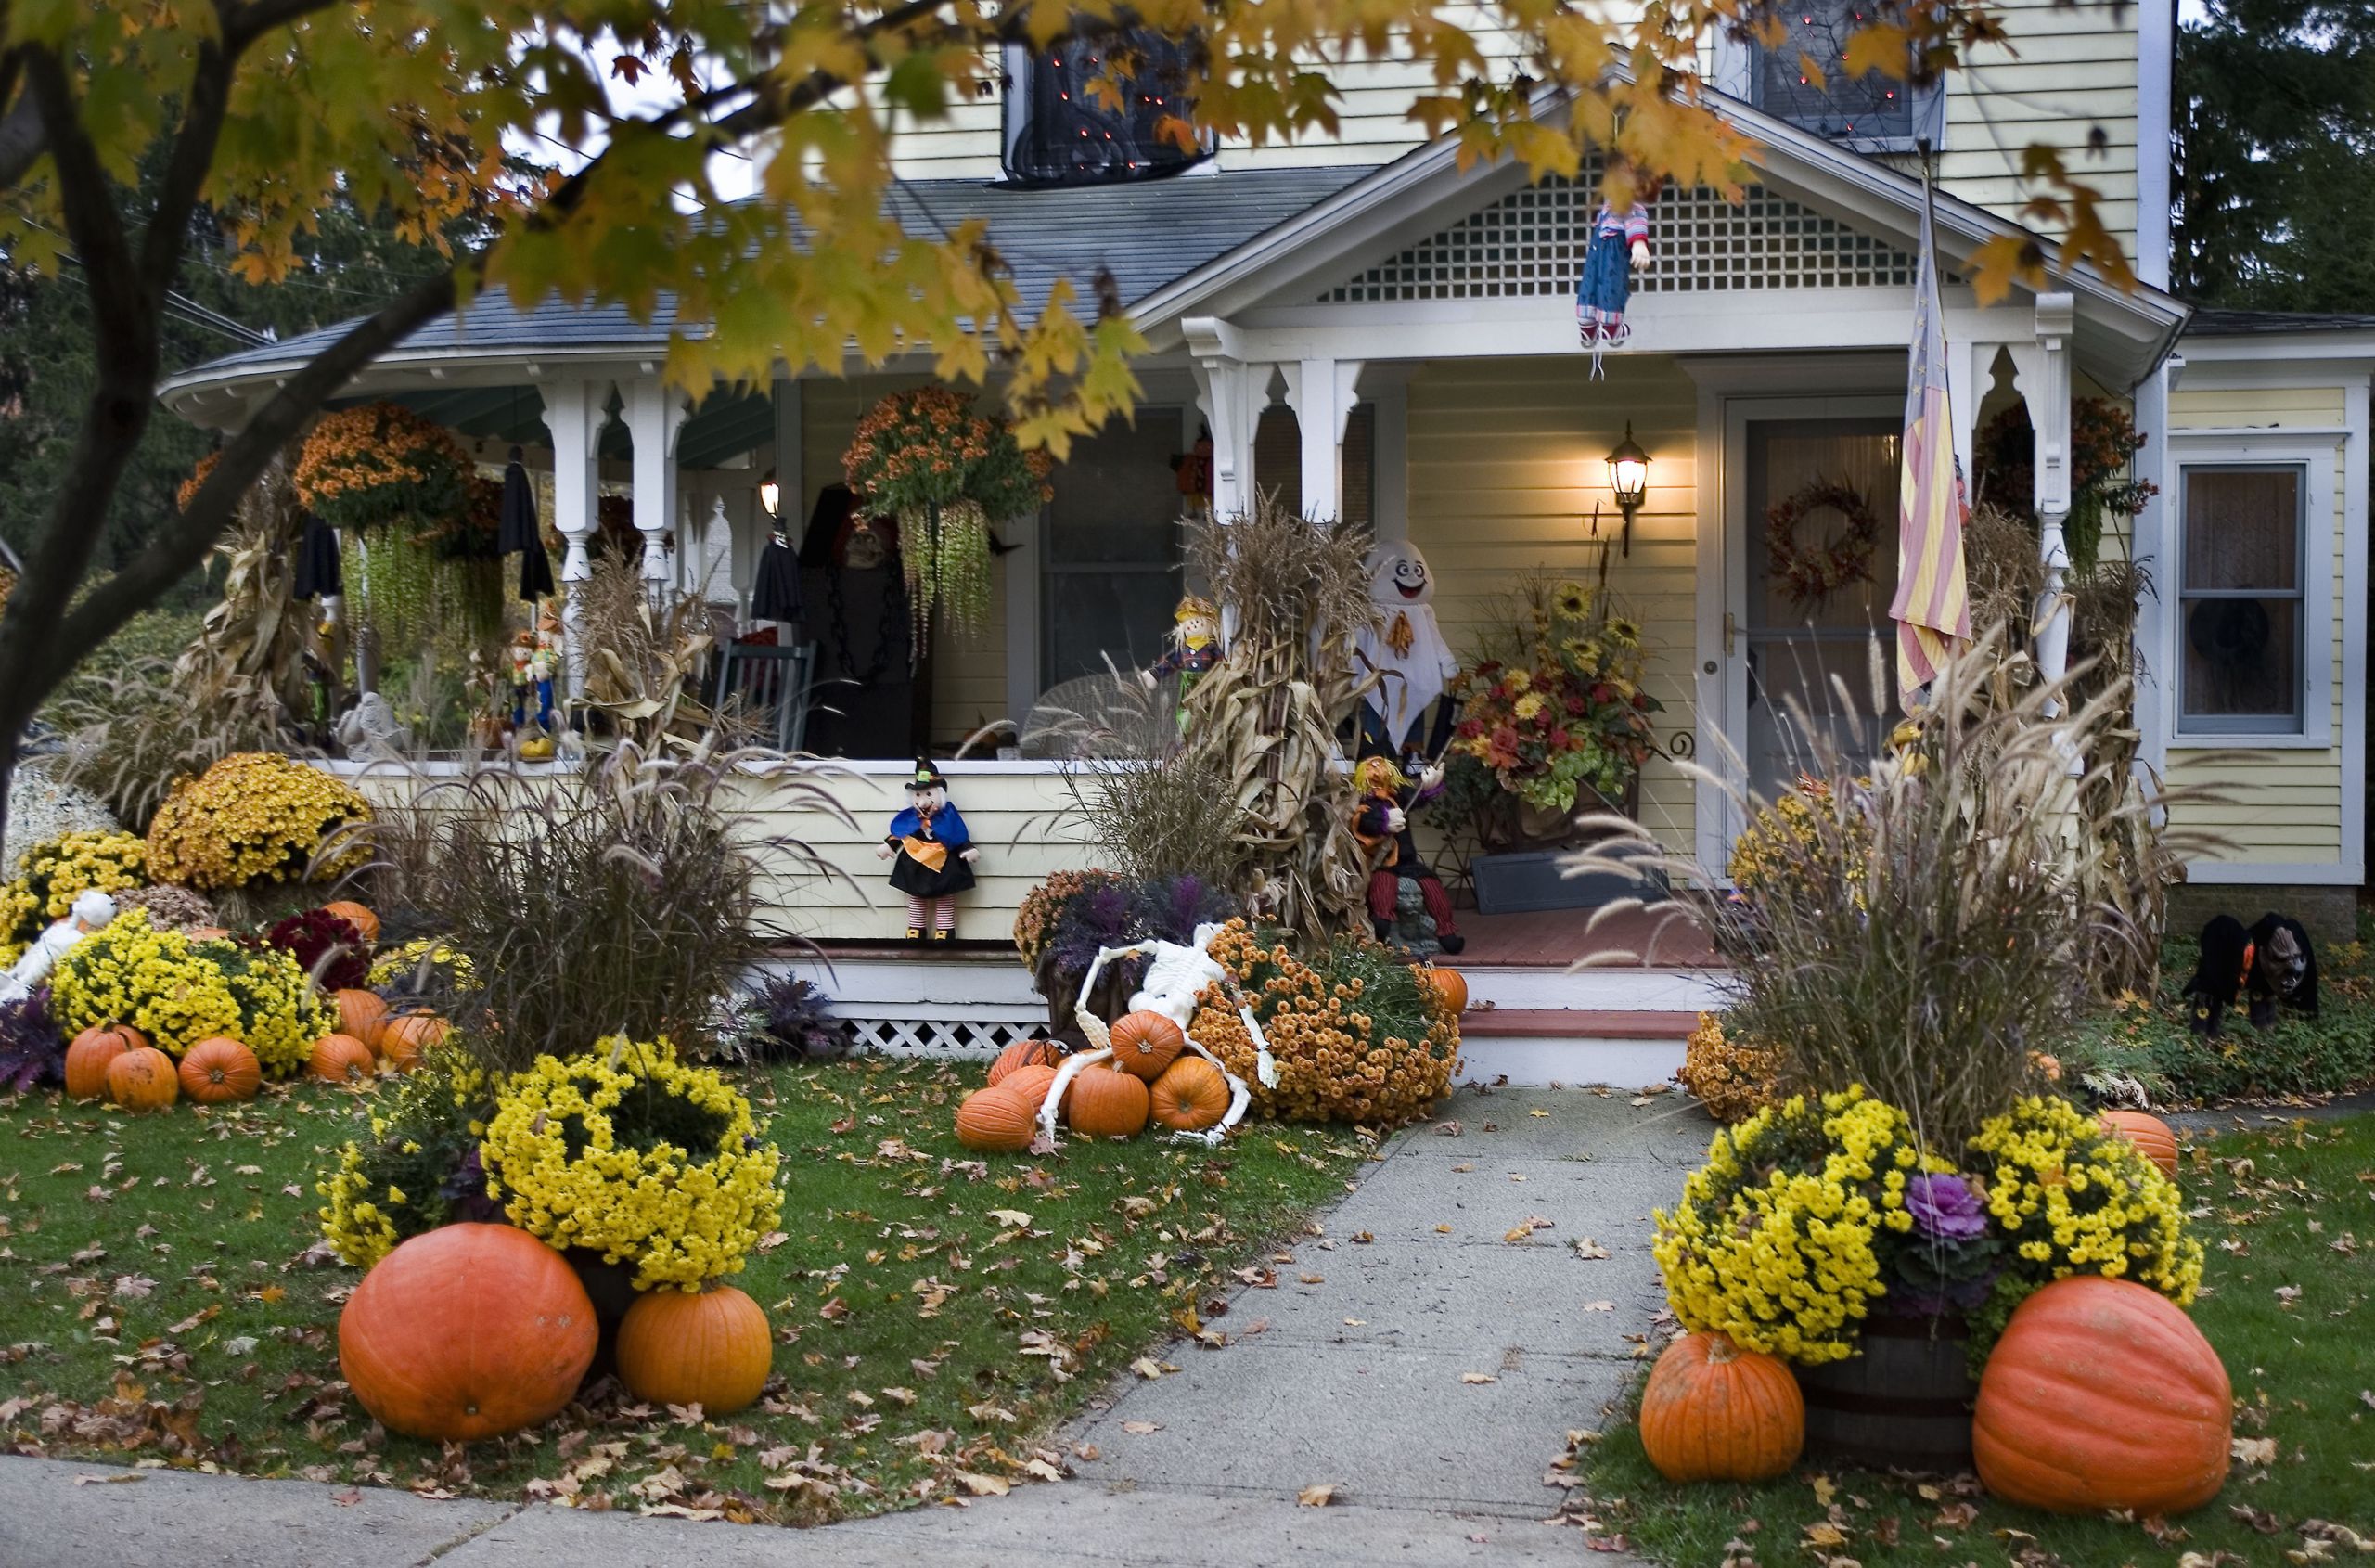 Porch Halloween Decorations
 10 Best Outdoor Halloween Decorations Porch Decor Ideas